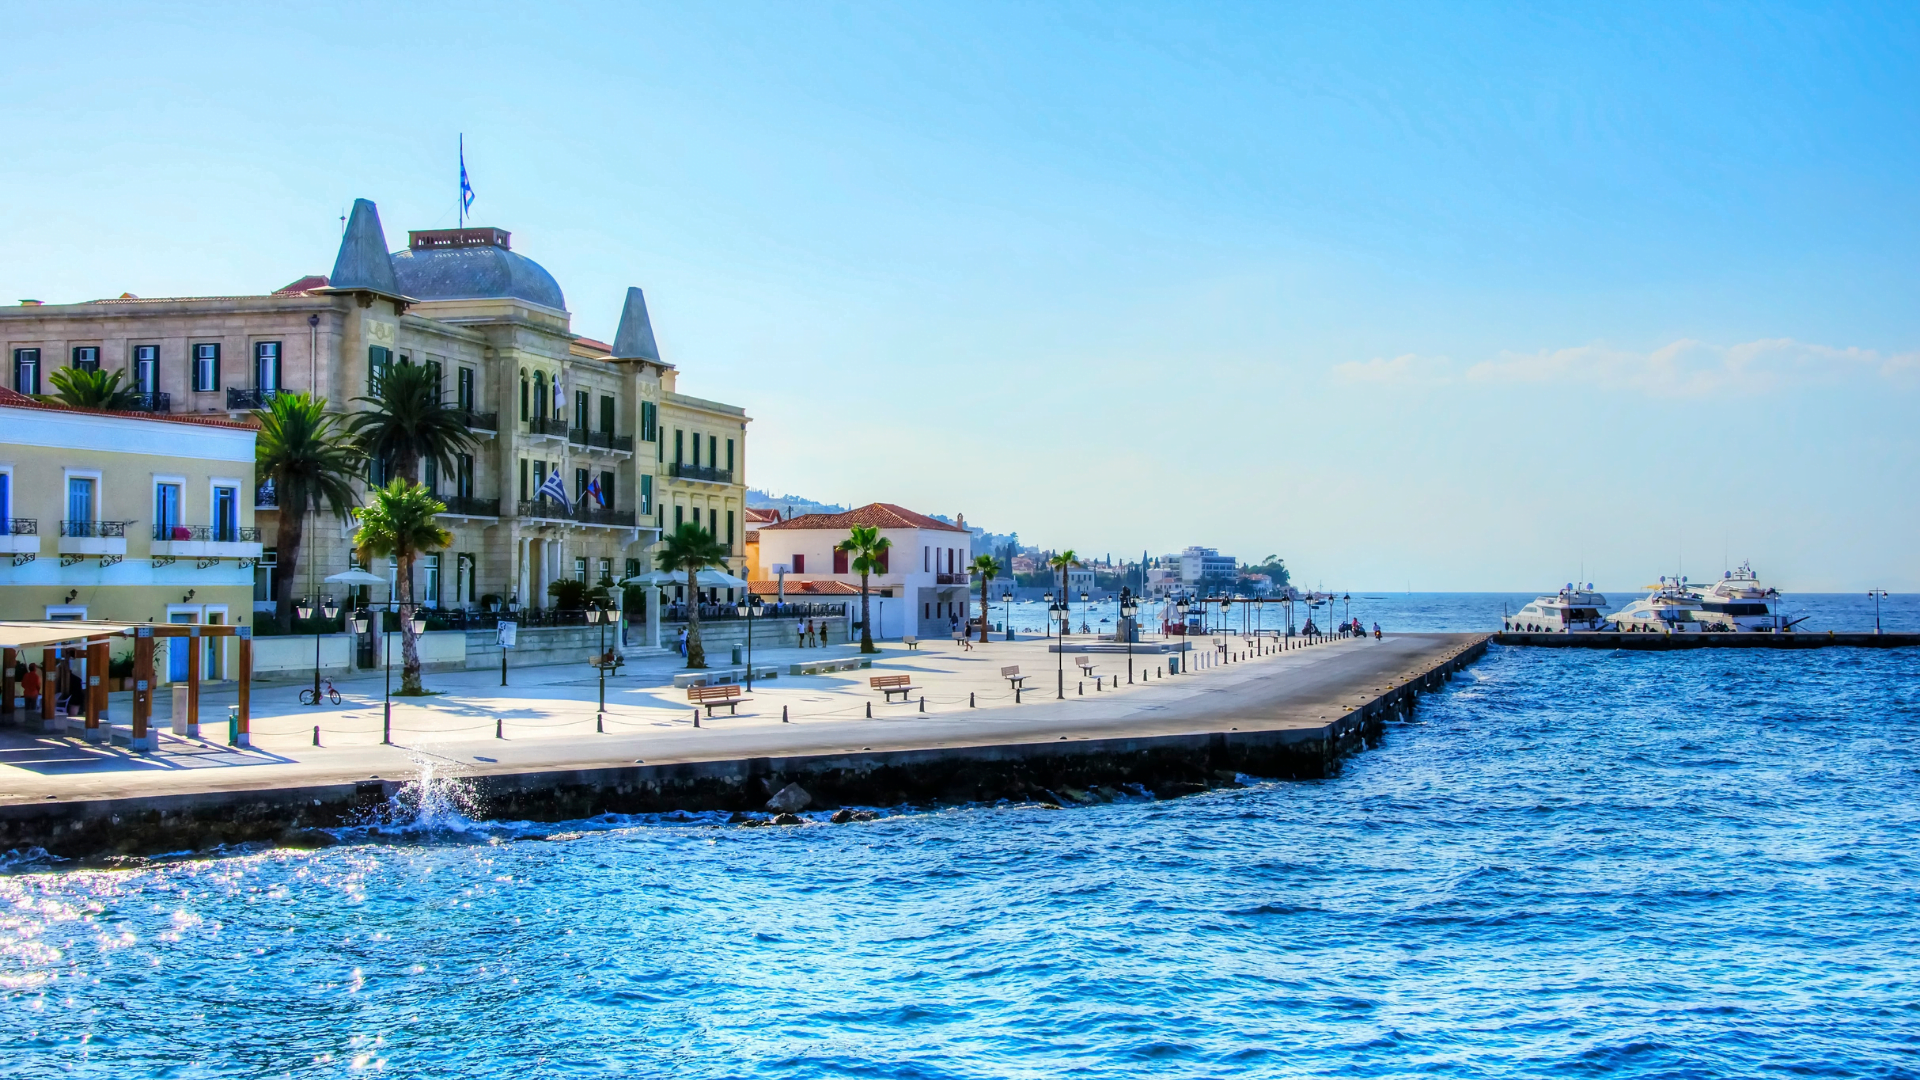 Poseidonio Square - Spetses island